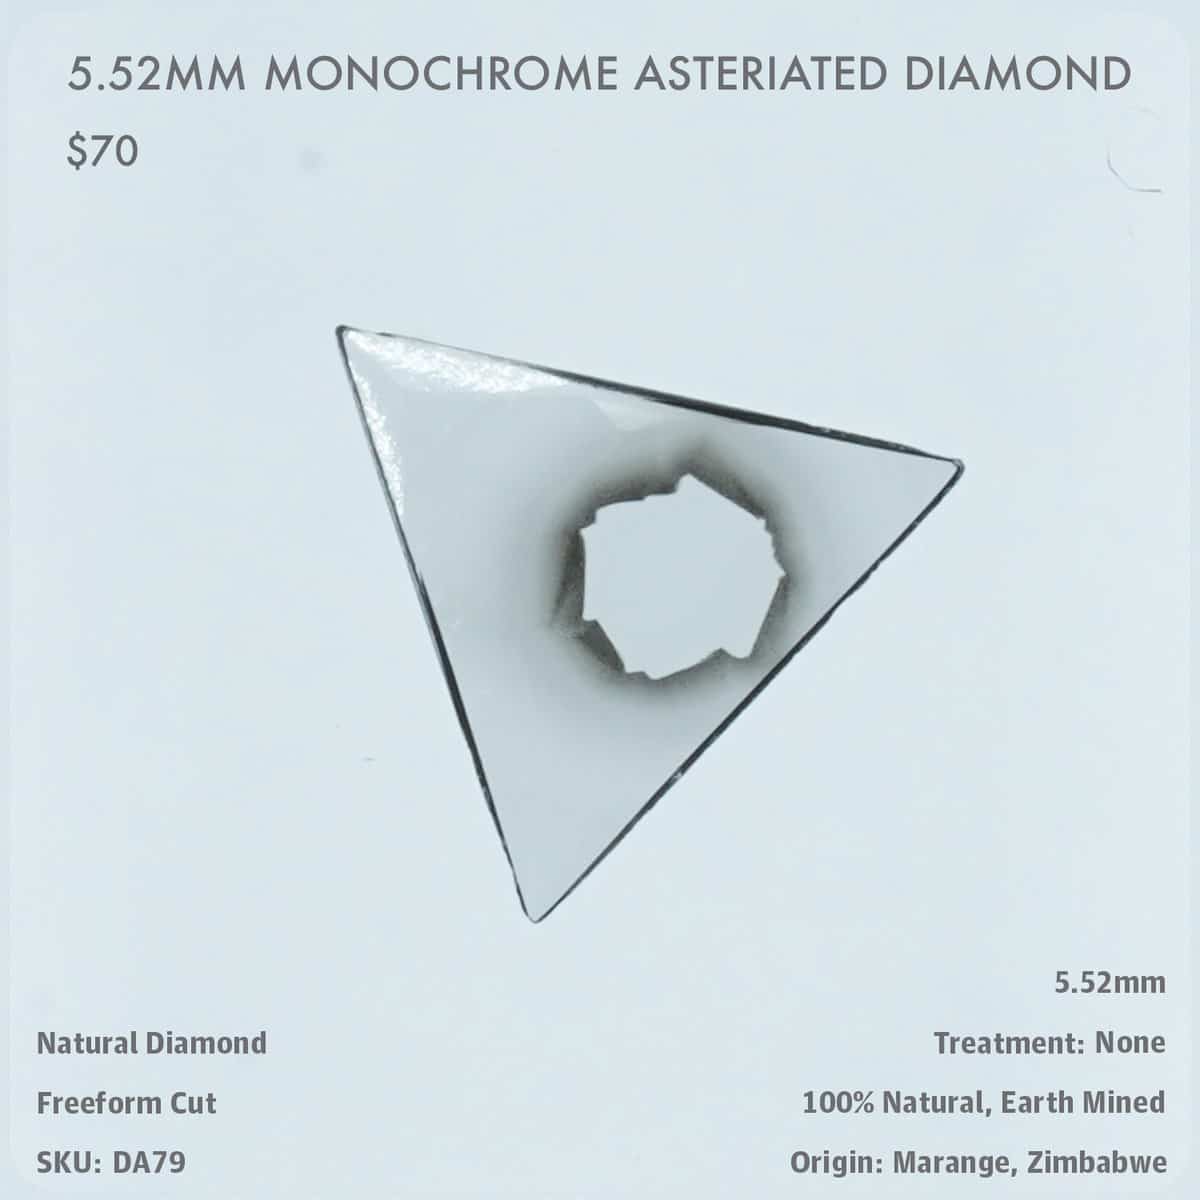 5.52mm Monochrome Asteriated Diamond